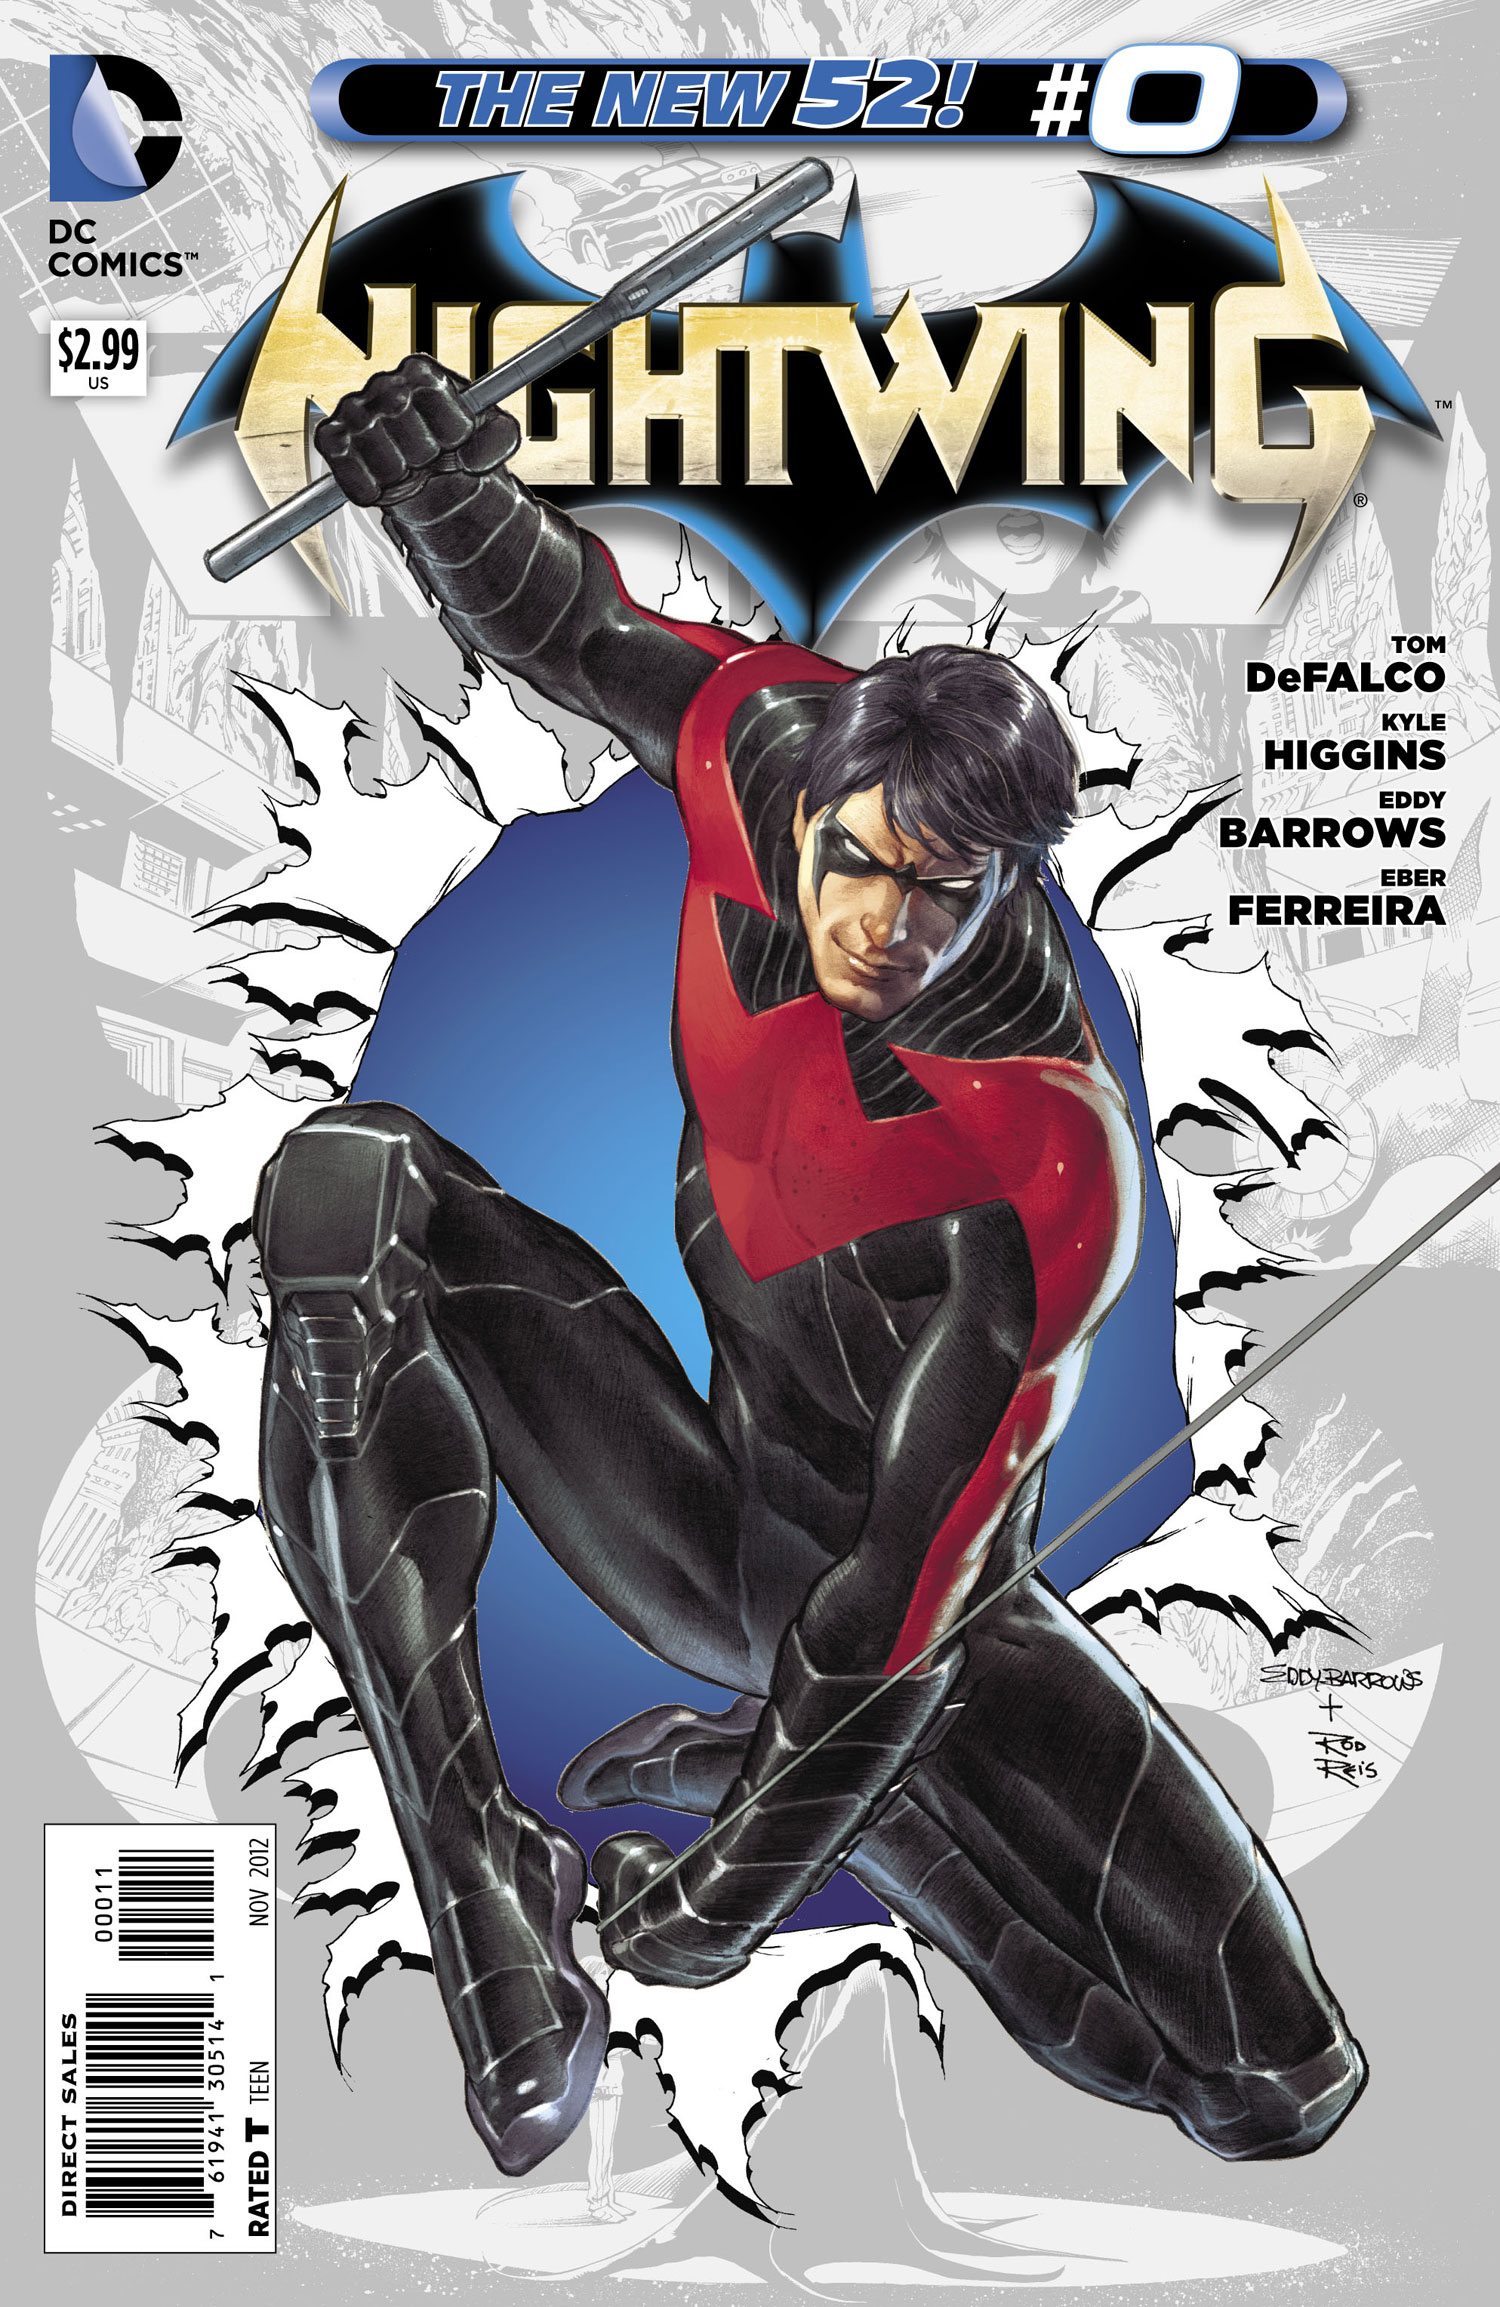 Nightwing Vol. 3 #0